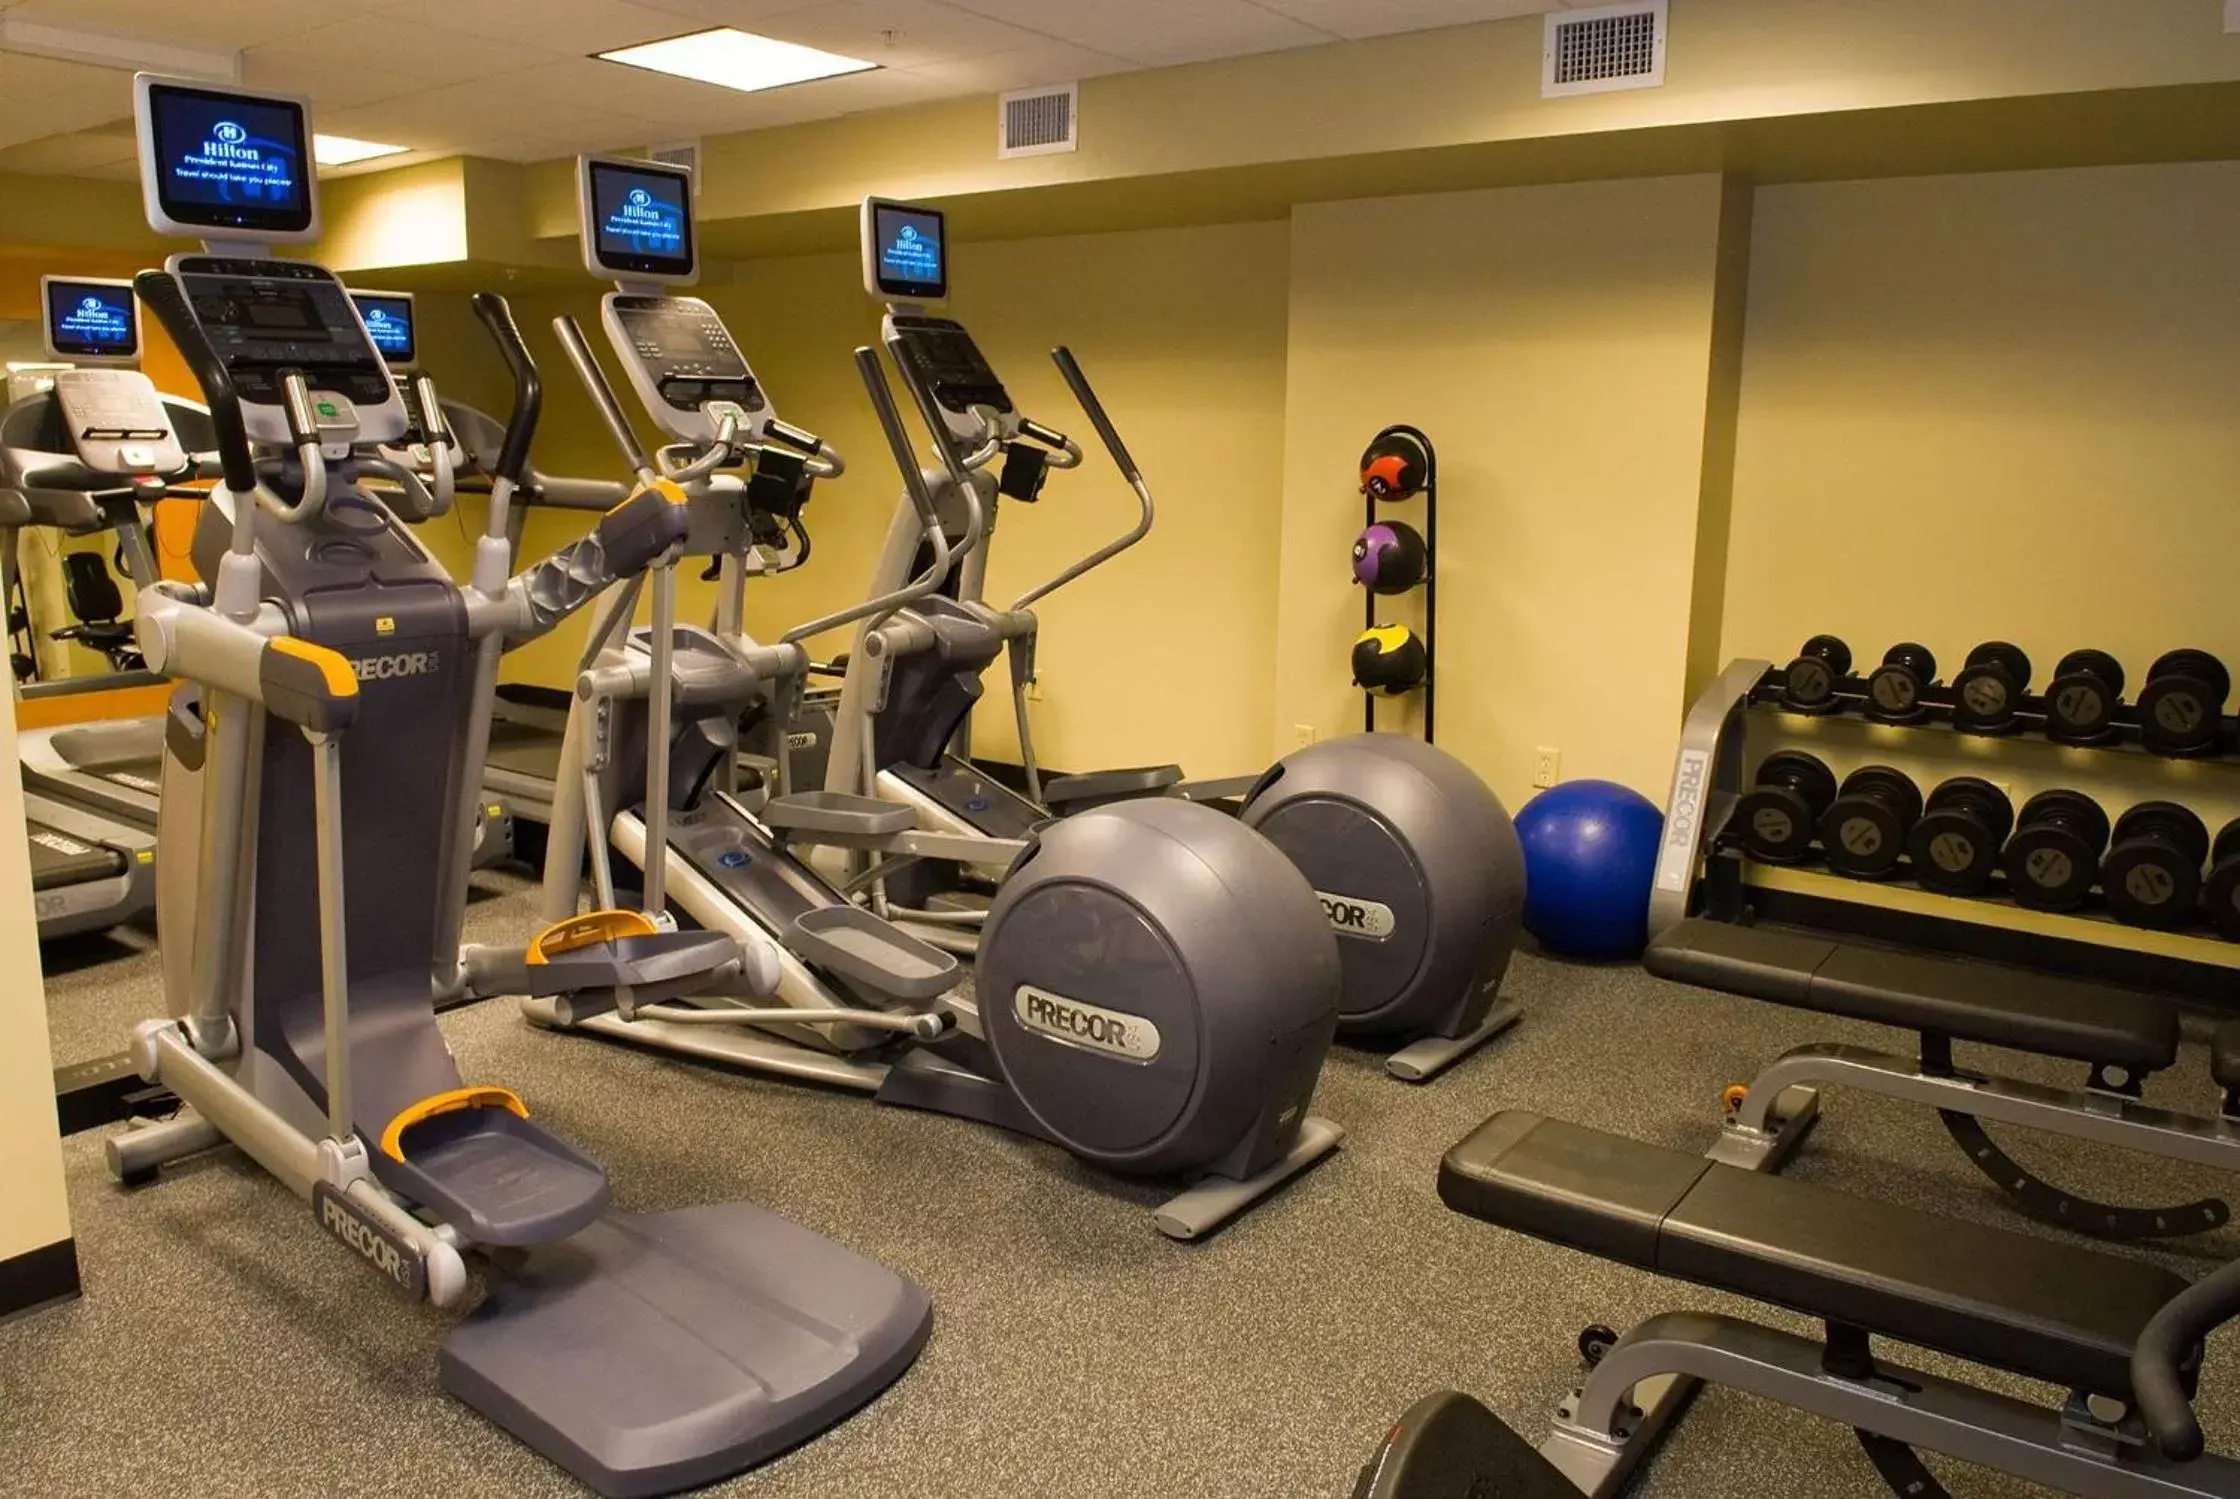 Fitness centre/facilities, Fitness Center/Facilities in Hilton President Kansas City